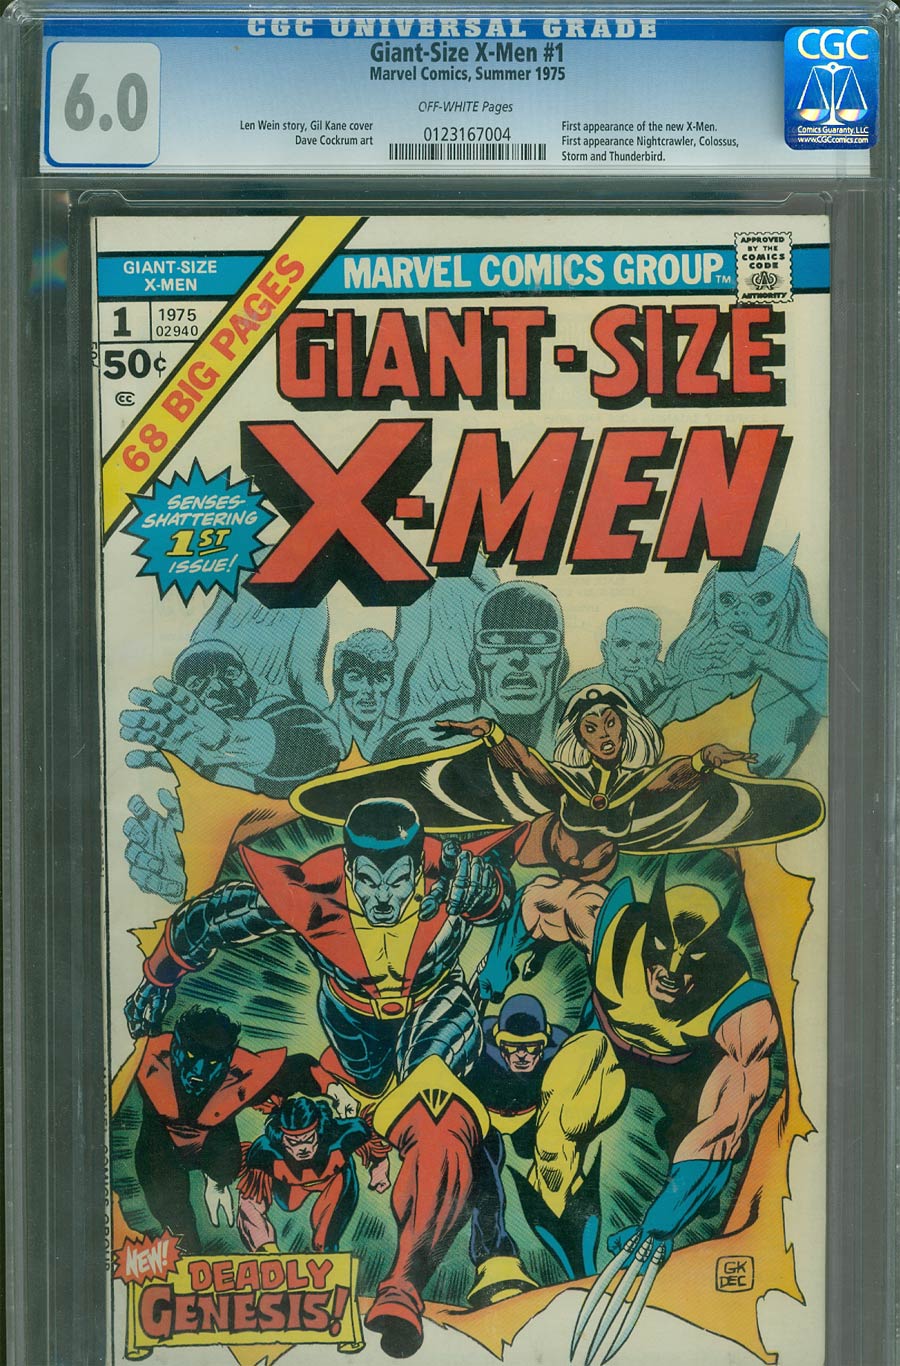 Giant Size X-Men #1 Cover E CGC 6.0